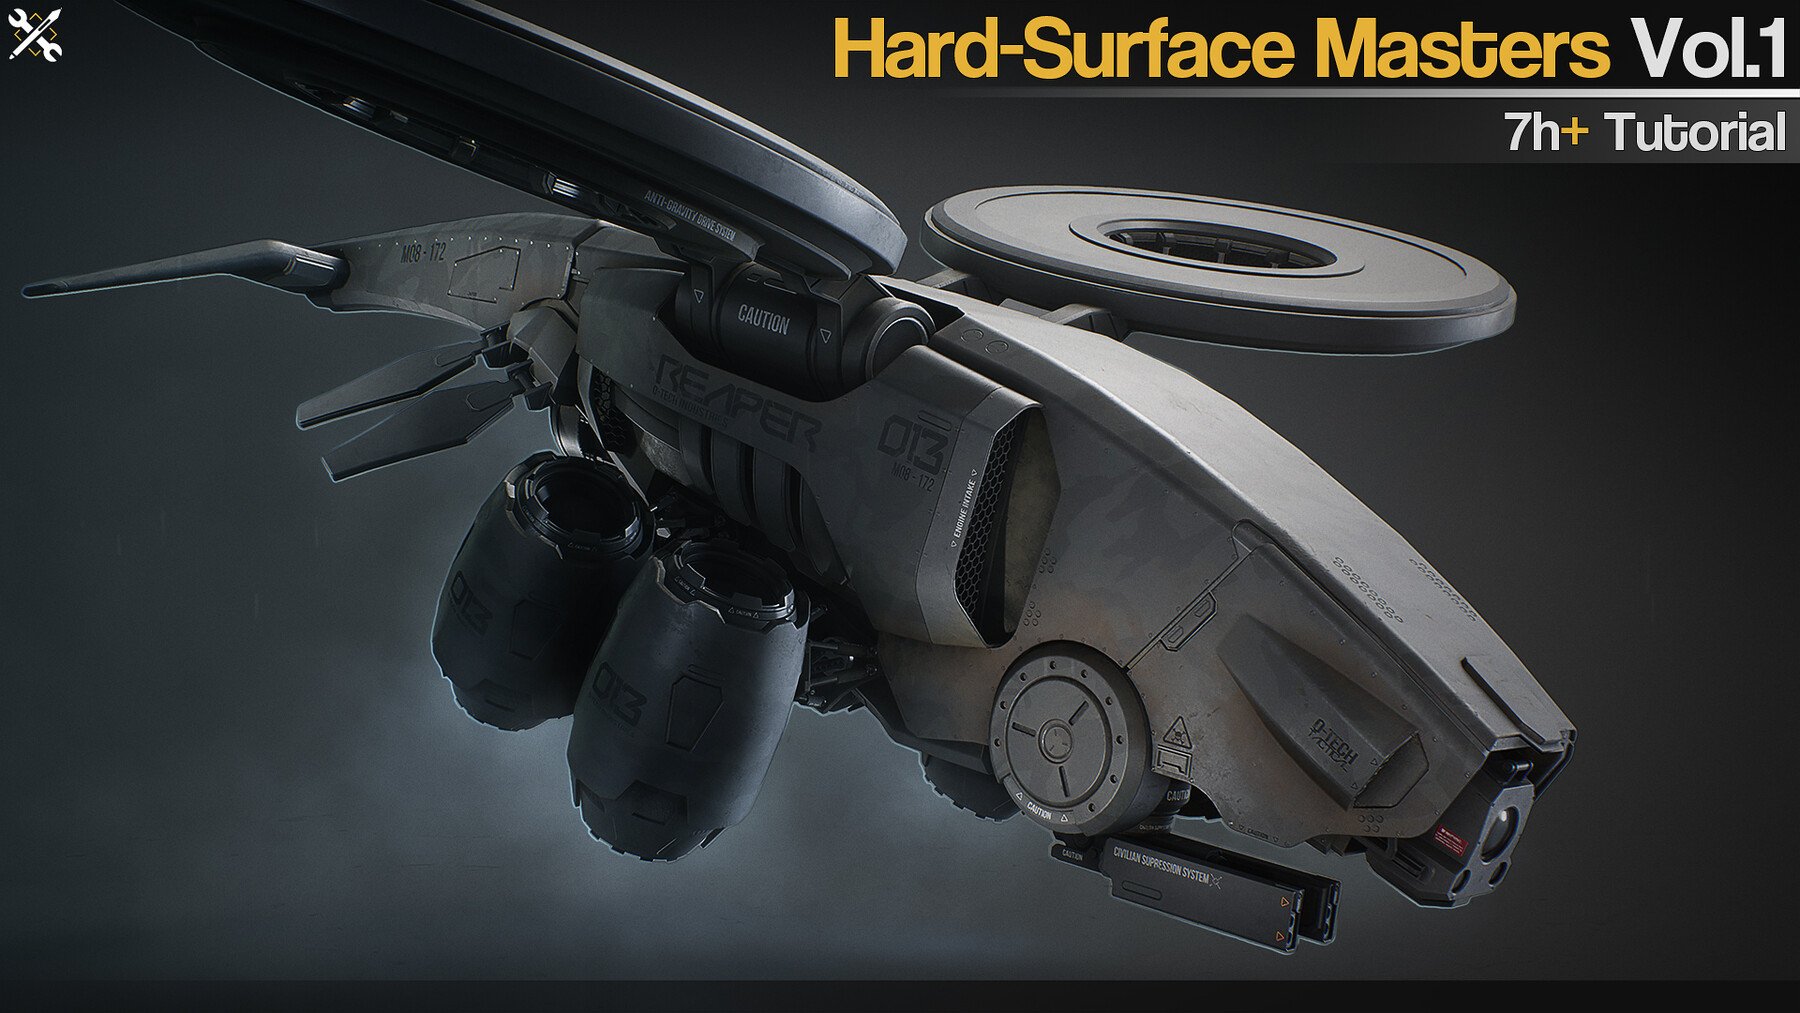 Hard-Surface Masters Vol.1